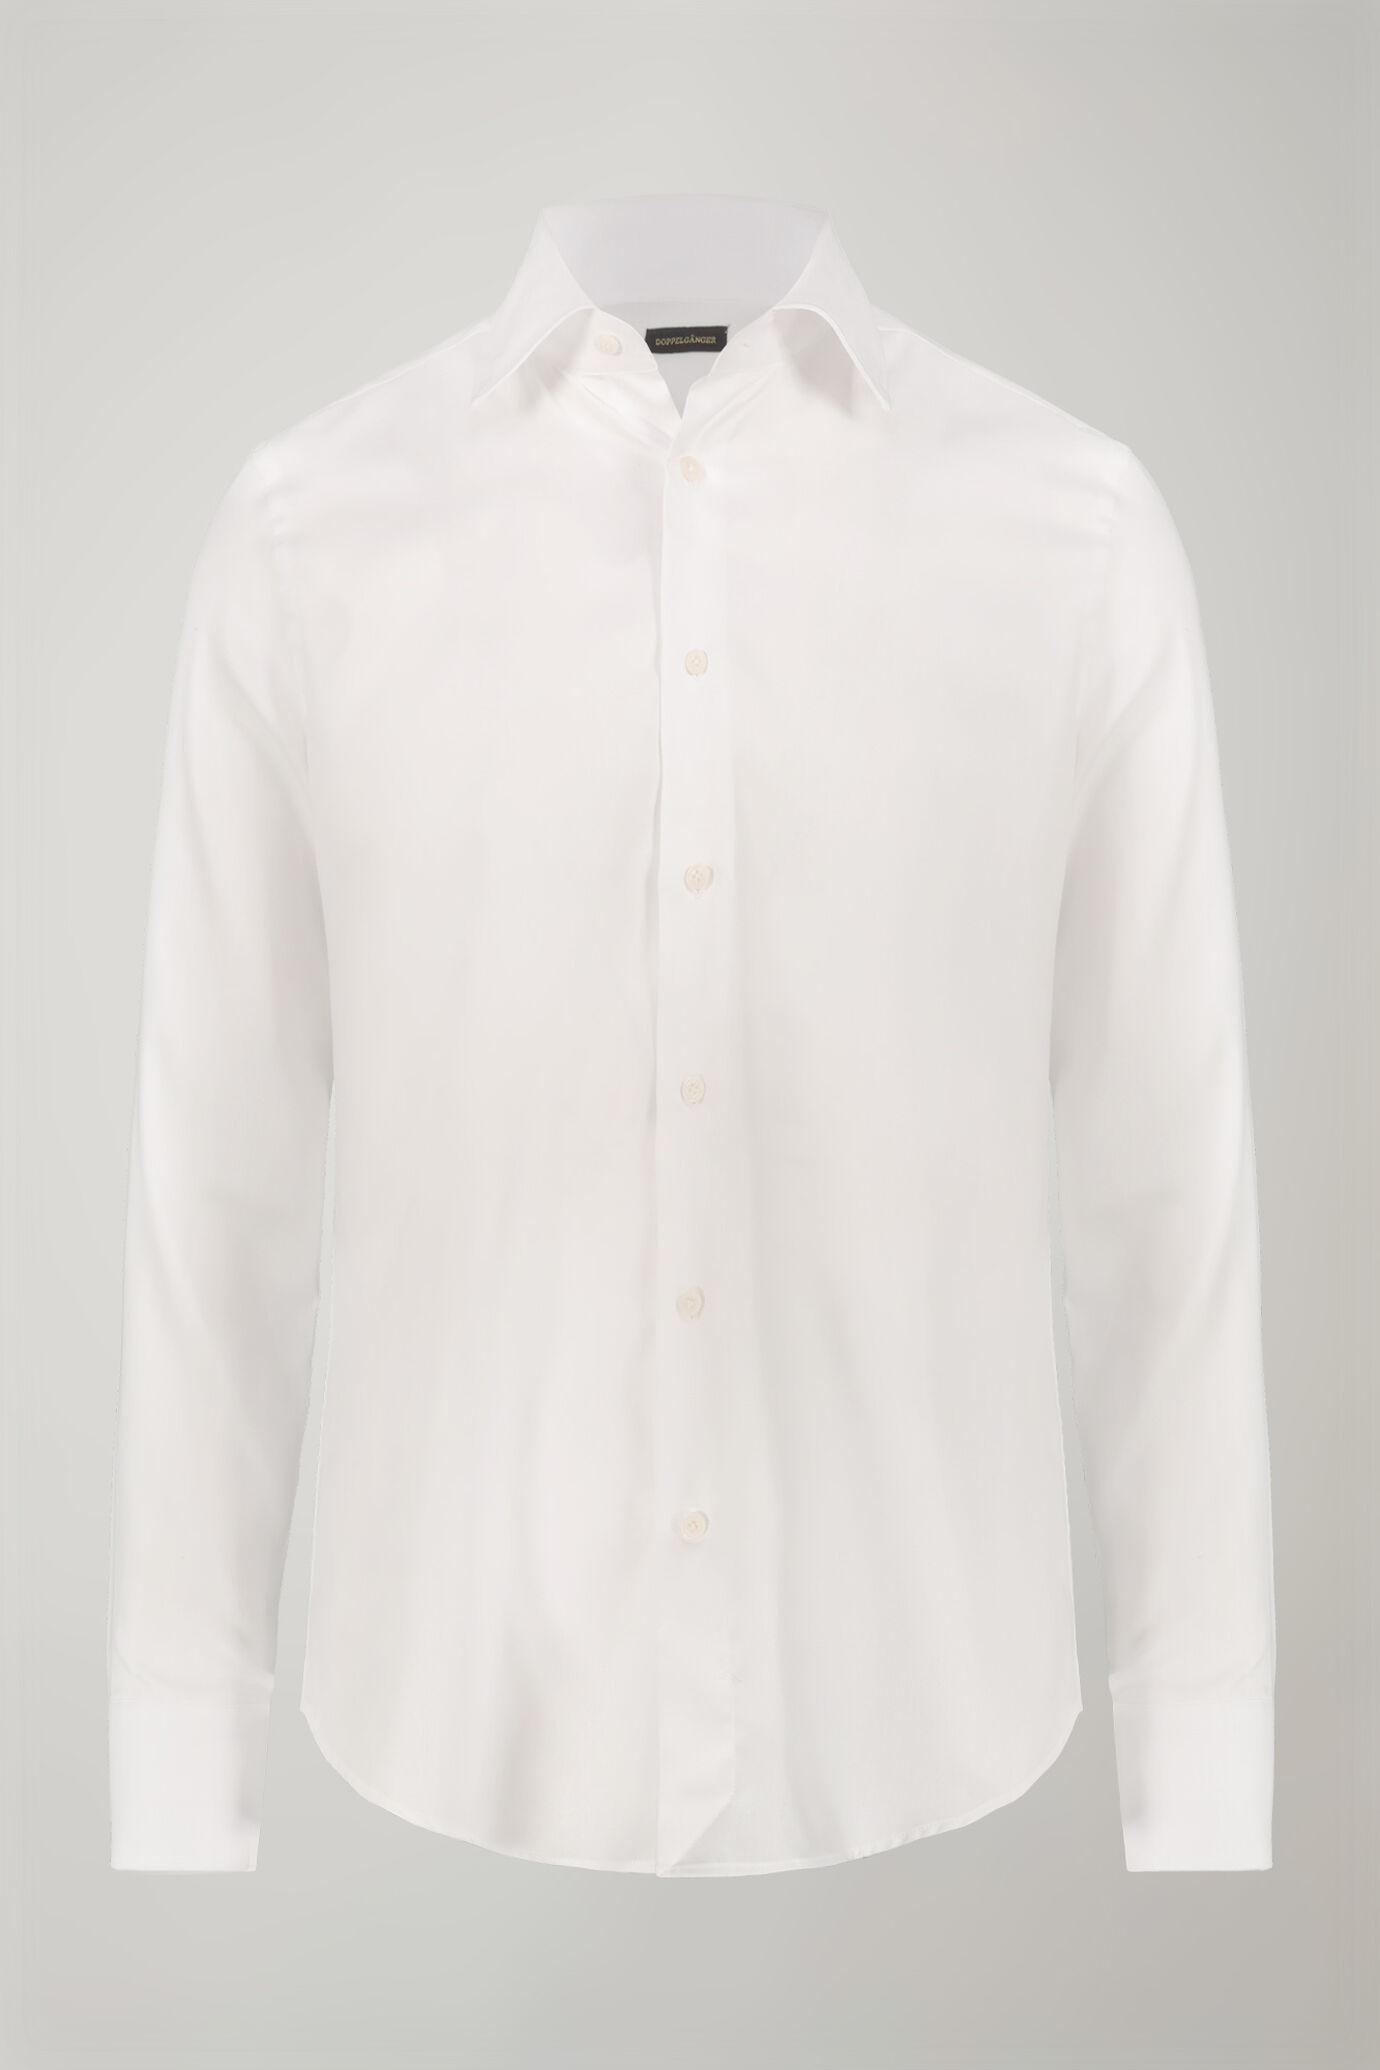 Men's shirt classic collar 100% cotton lightweight oxford fabric regular fit image number 5